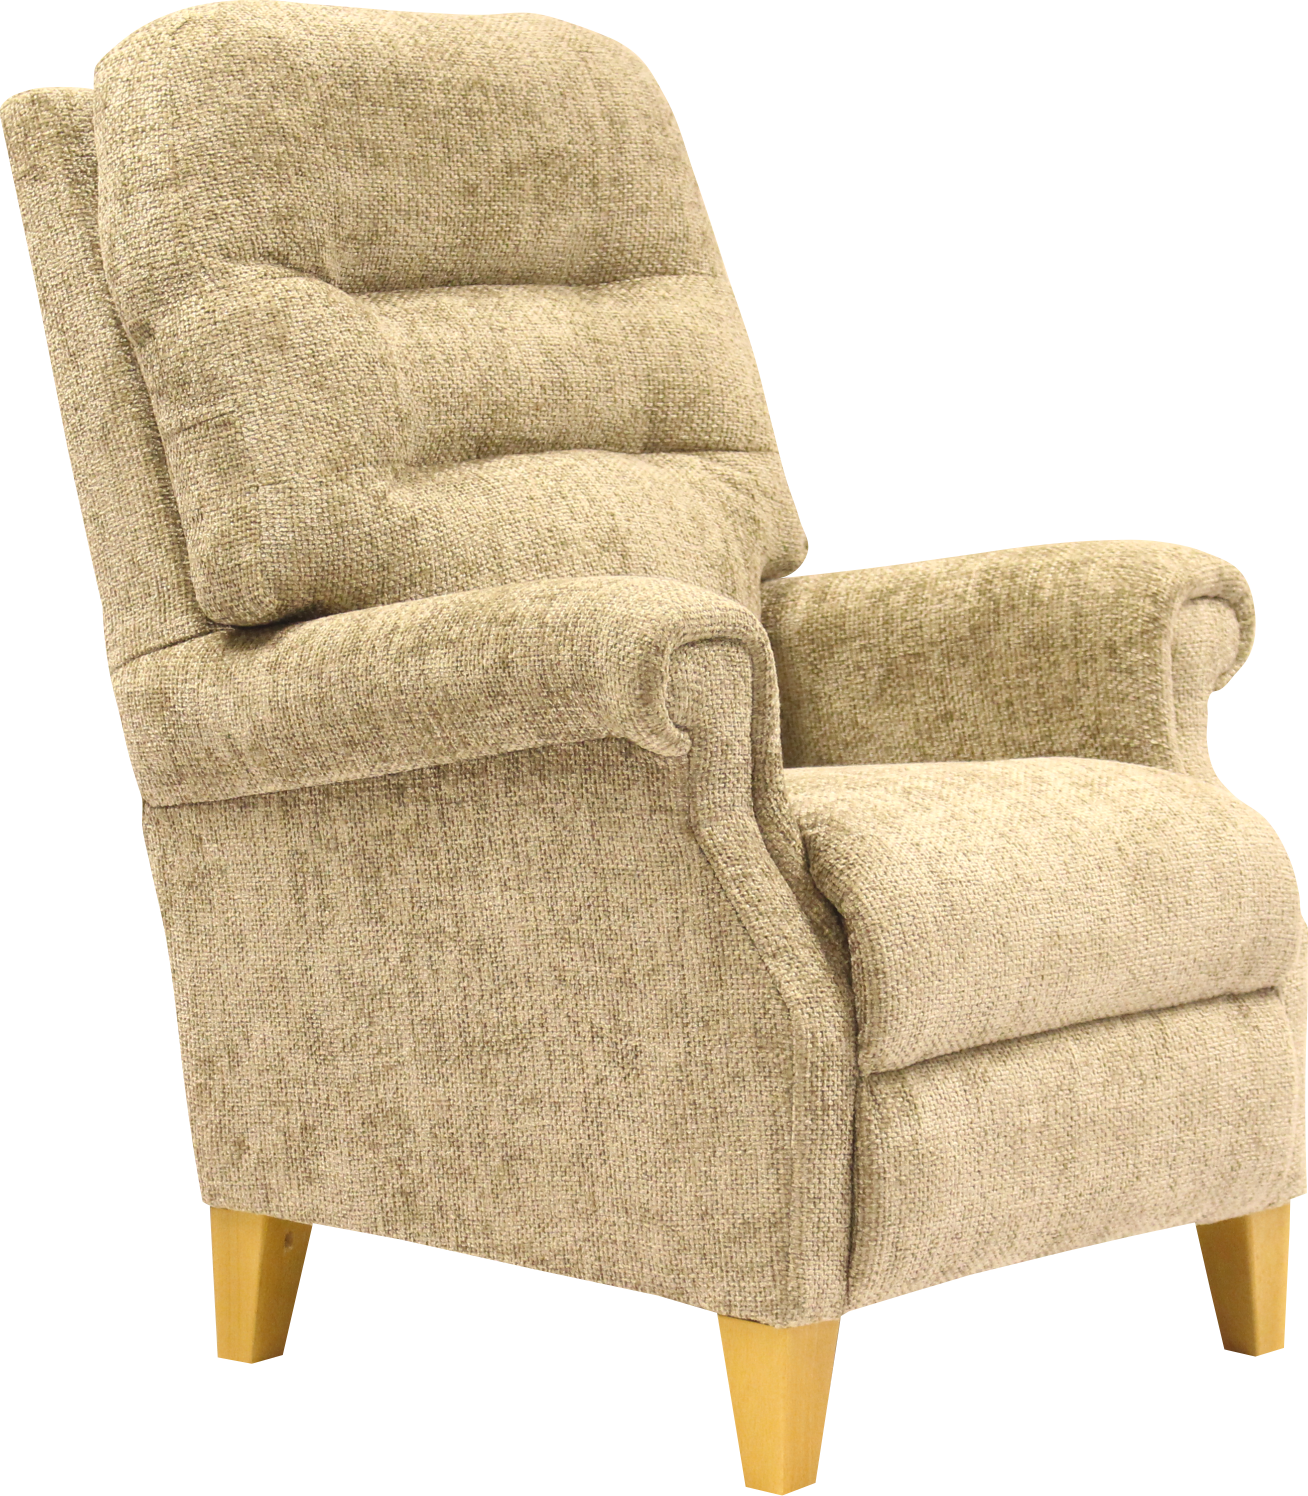 Turford Upholstered Arm Chair Grande